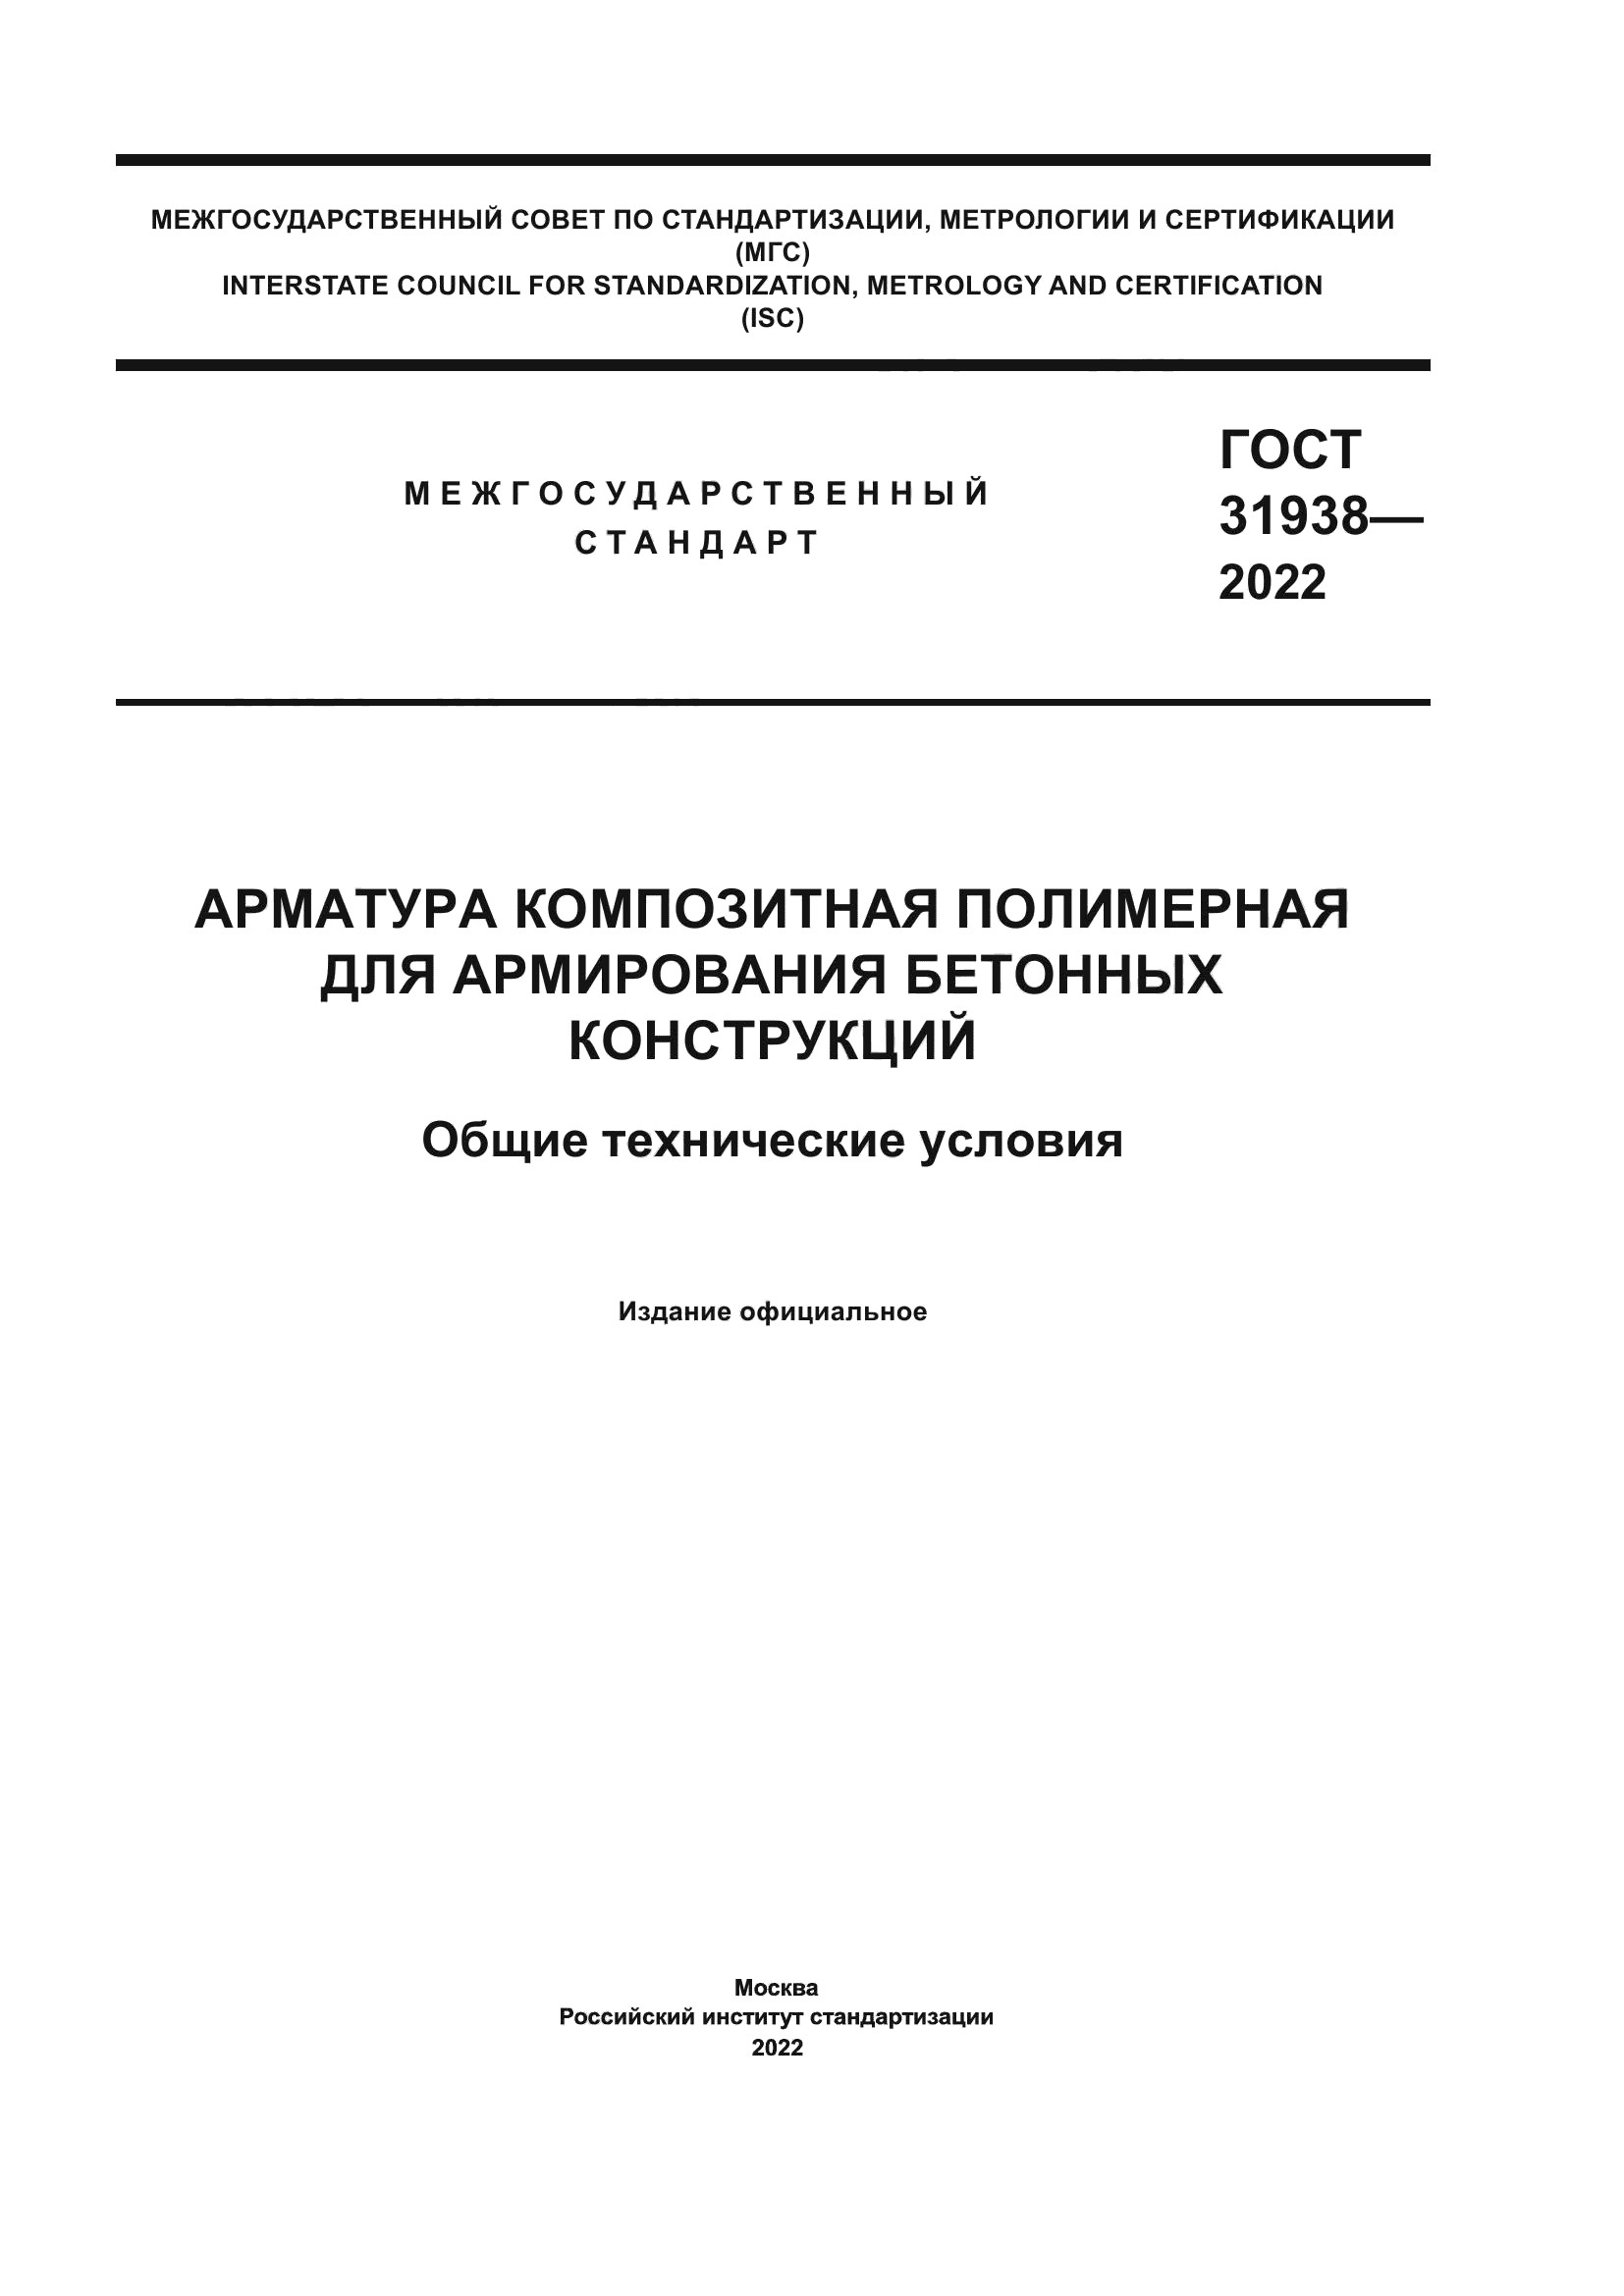 ГОСТ 31938-2022